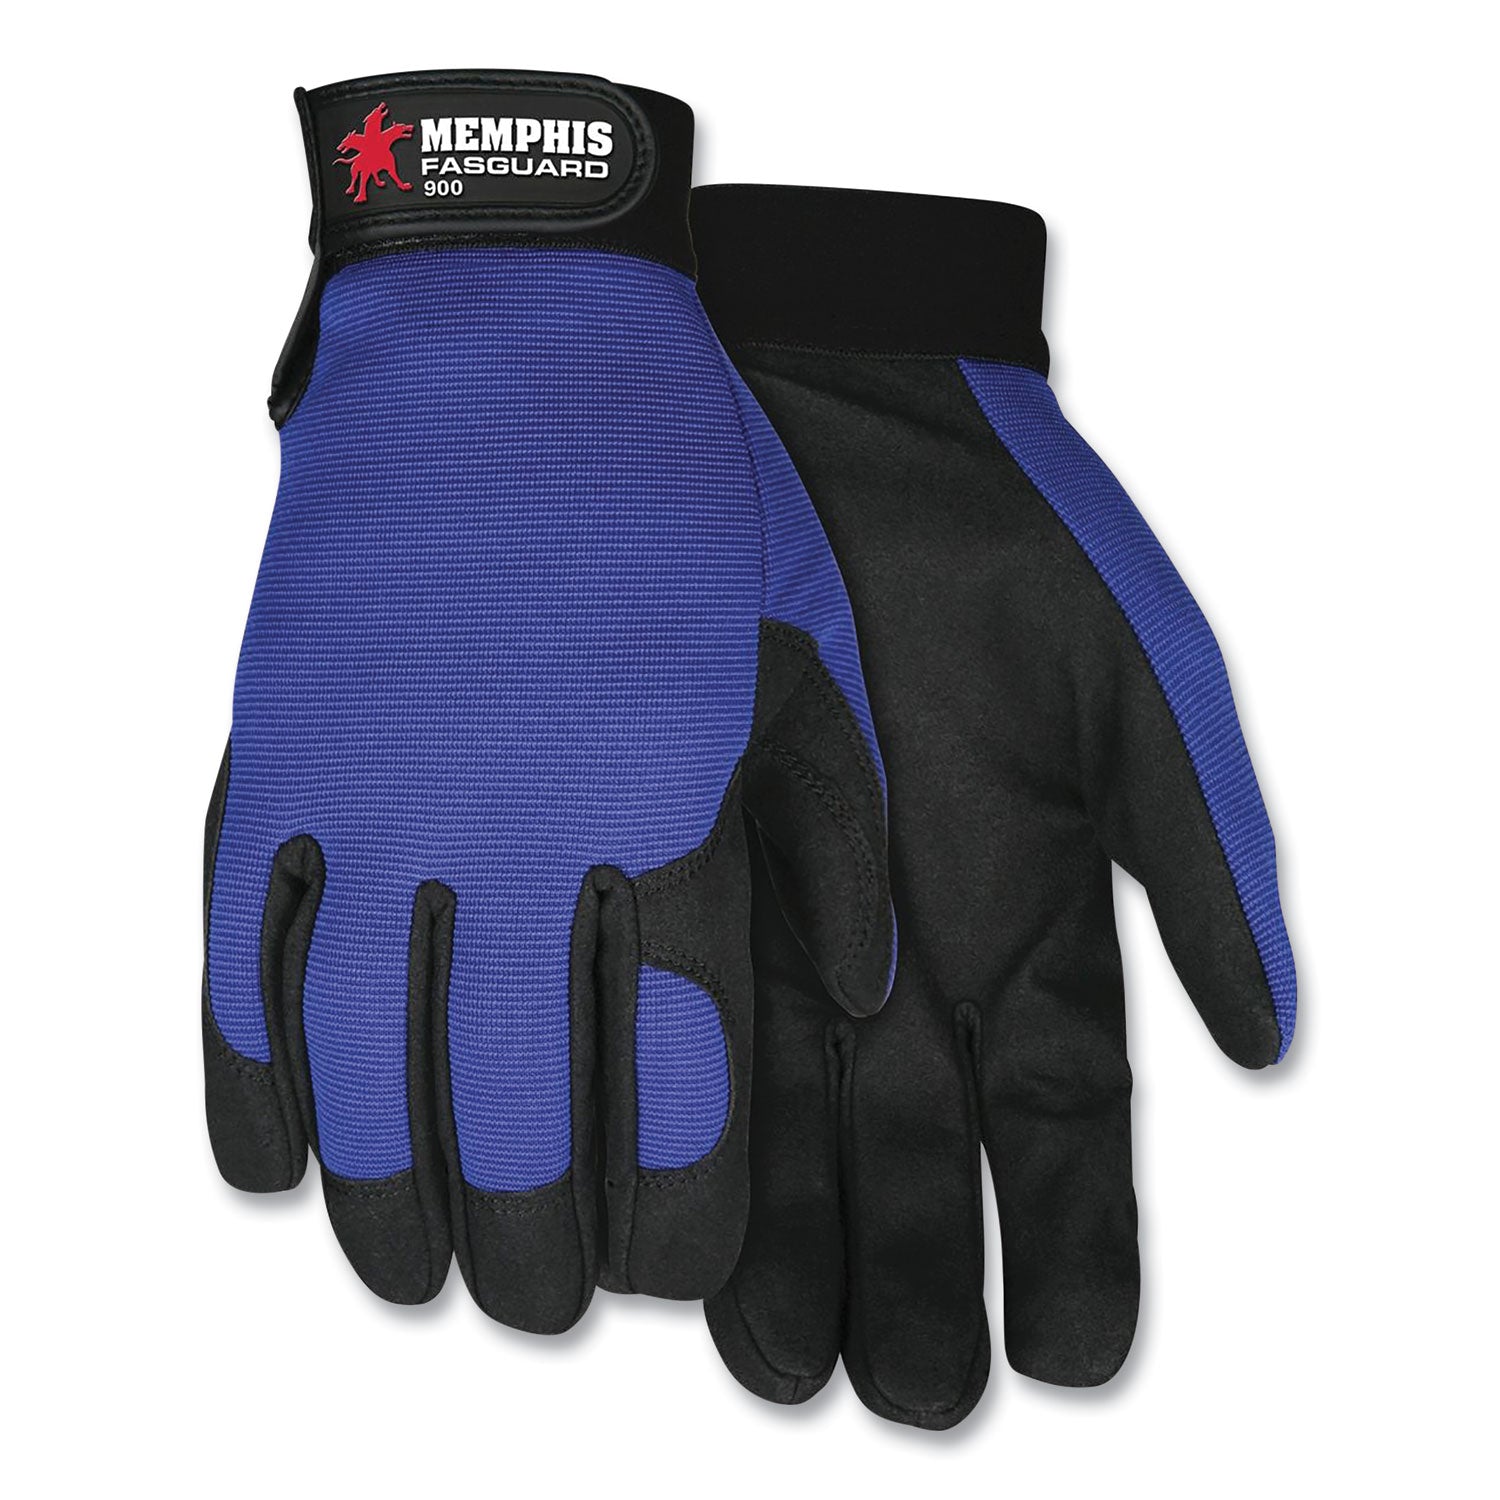 clarino-synthetic-leather-palm-mechanics-gloves-blue-black-x-large_crw900xl - 1